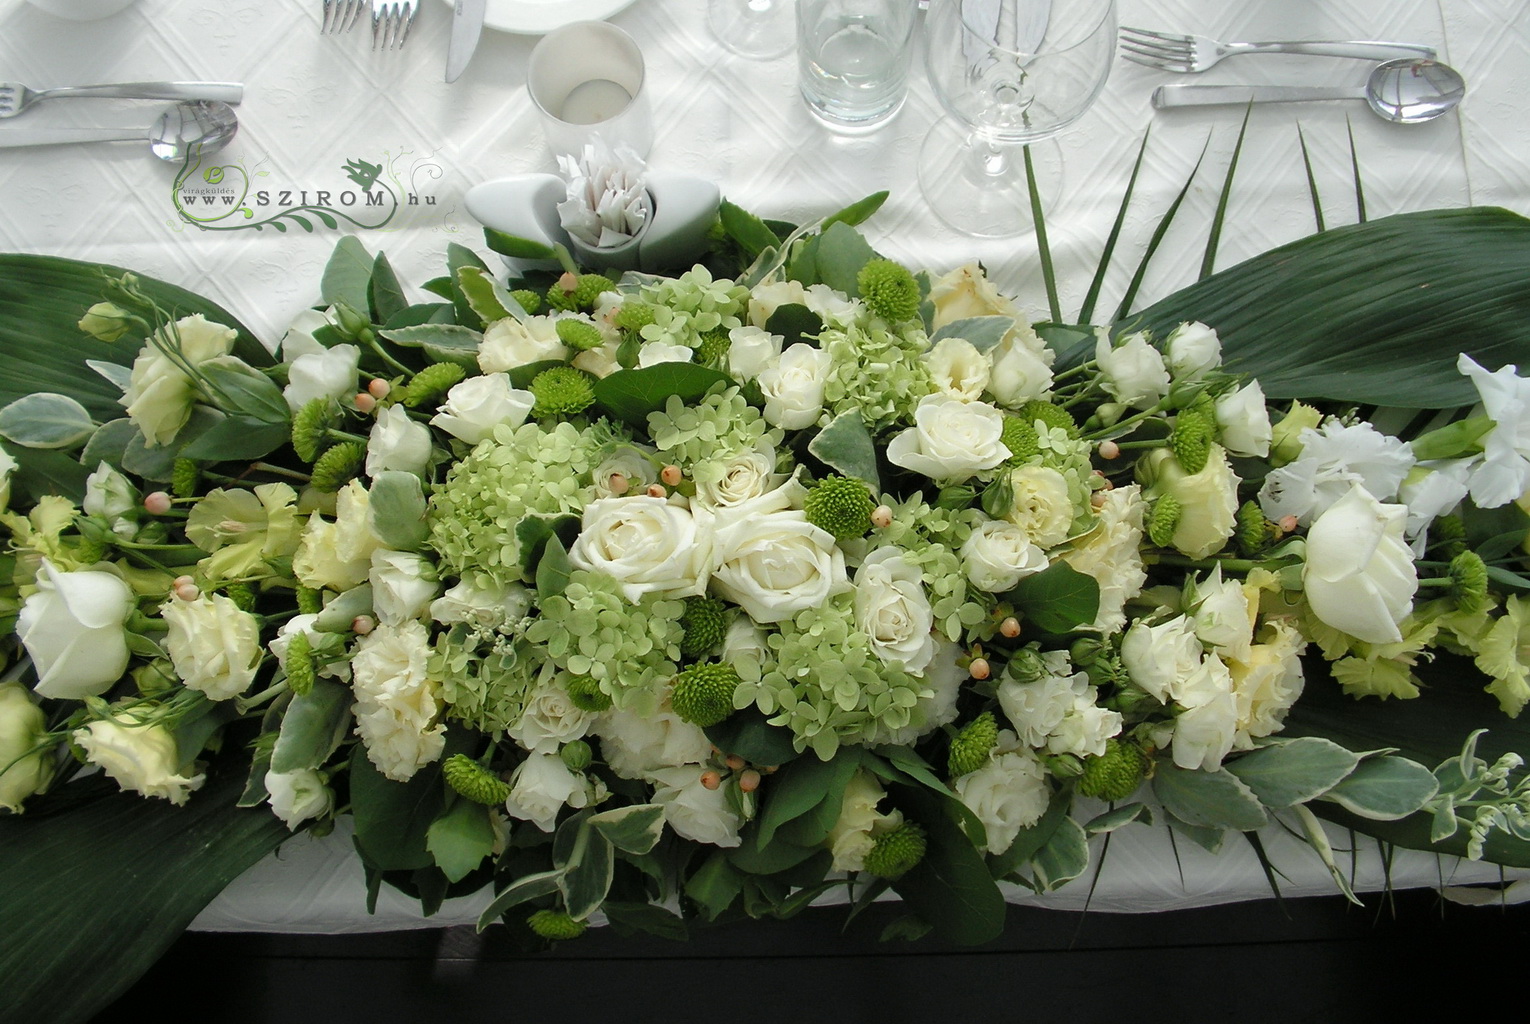 flower delivery Budapest - Main table centerpiece with hydrangea, Spoon ship  Budapest (rose, eustoma, hydrangea, chrysanthemum, gadiolus, green, white), wedding